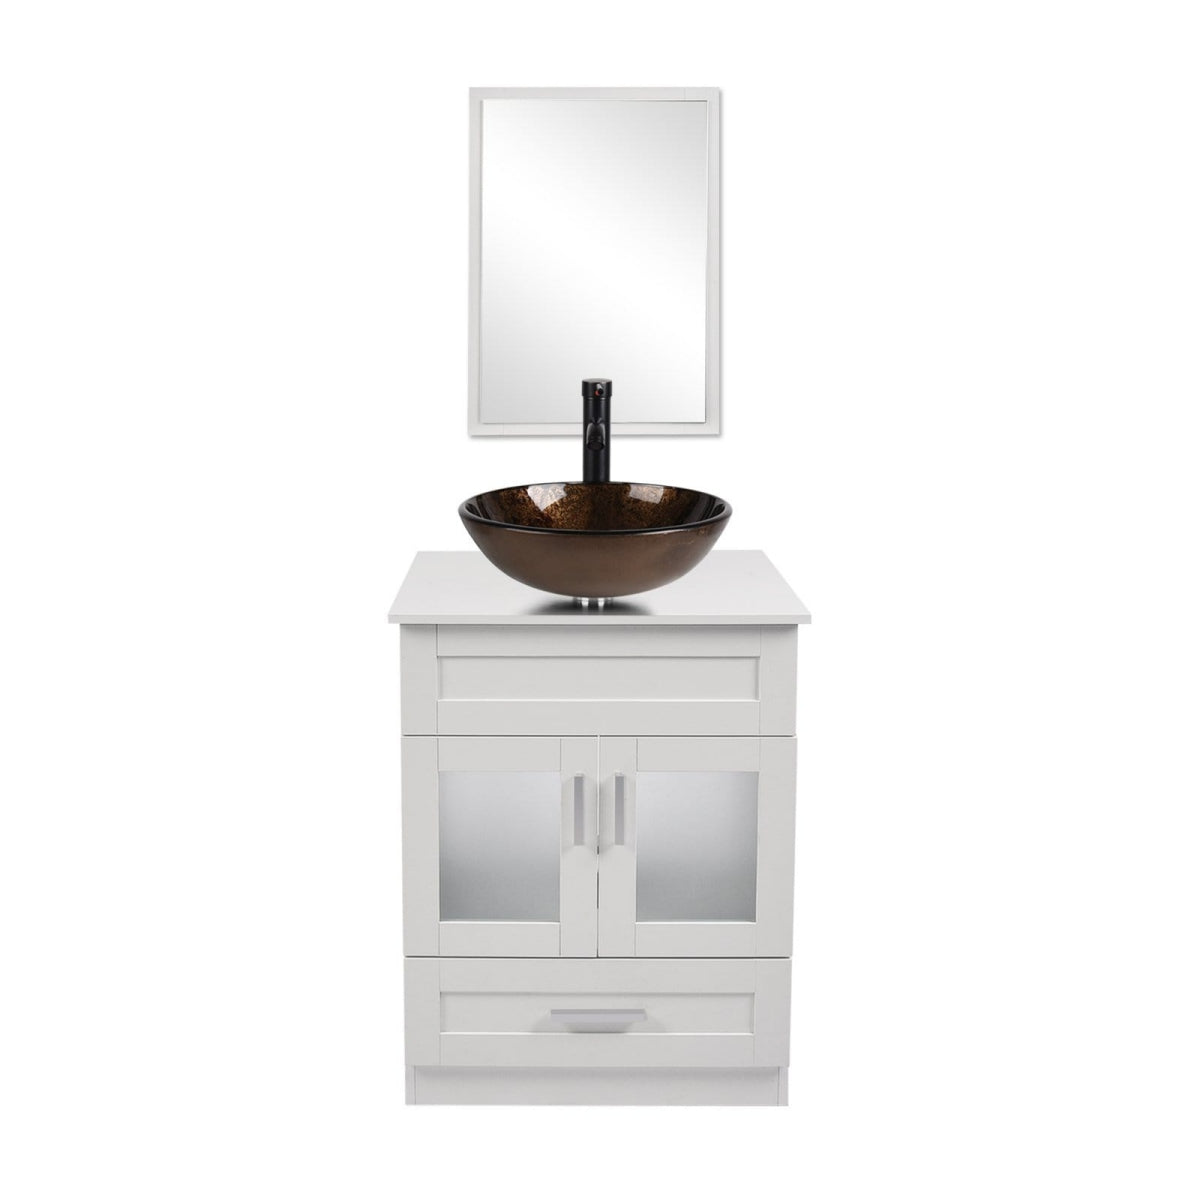 Elecwish White Bathroom Vanity with Brown Round Sink Set BA1001-WH